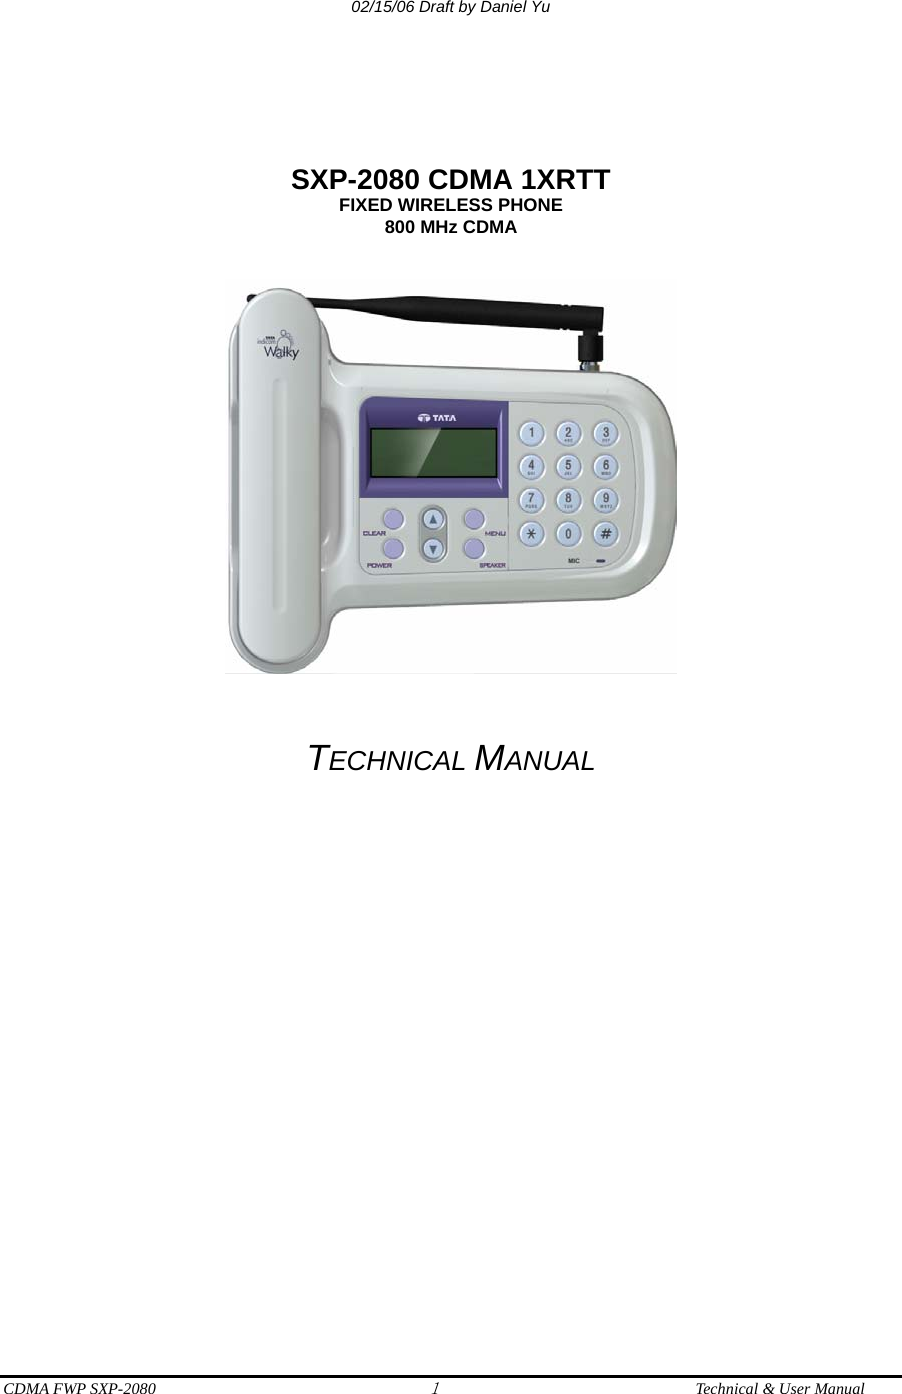  CDMA FWP SXP-2080 1  Technical &amp; User Manual 02/15/06 Draft by Daniel Yu        SXP-2080 CDMA 1XRTT FIXED WIRELESS PHONE 800 MHz CDMA       TECHNICAL MANUAL                          